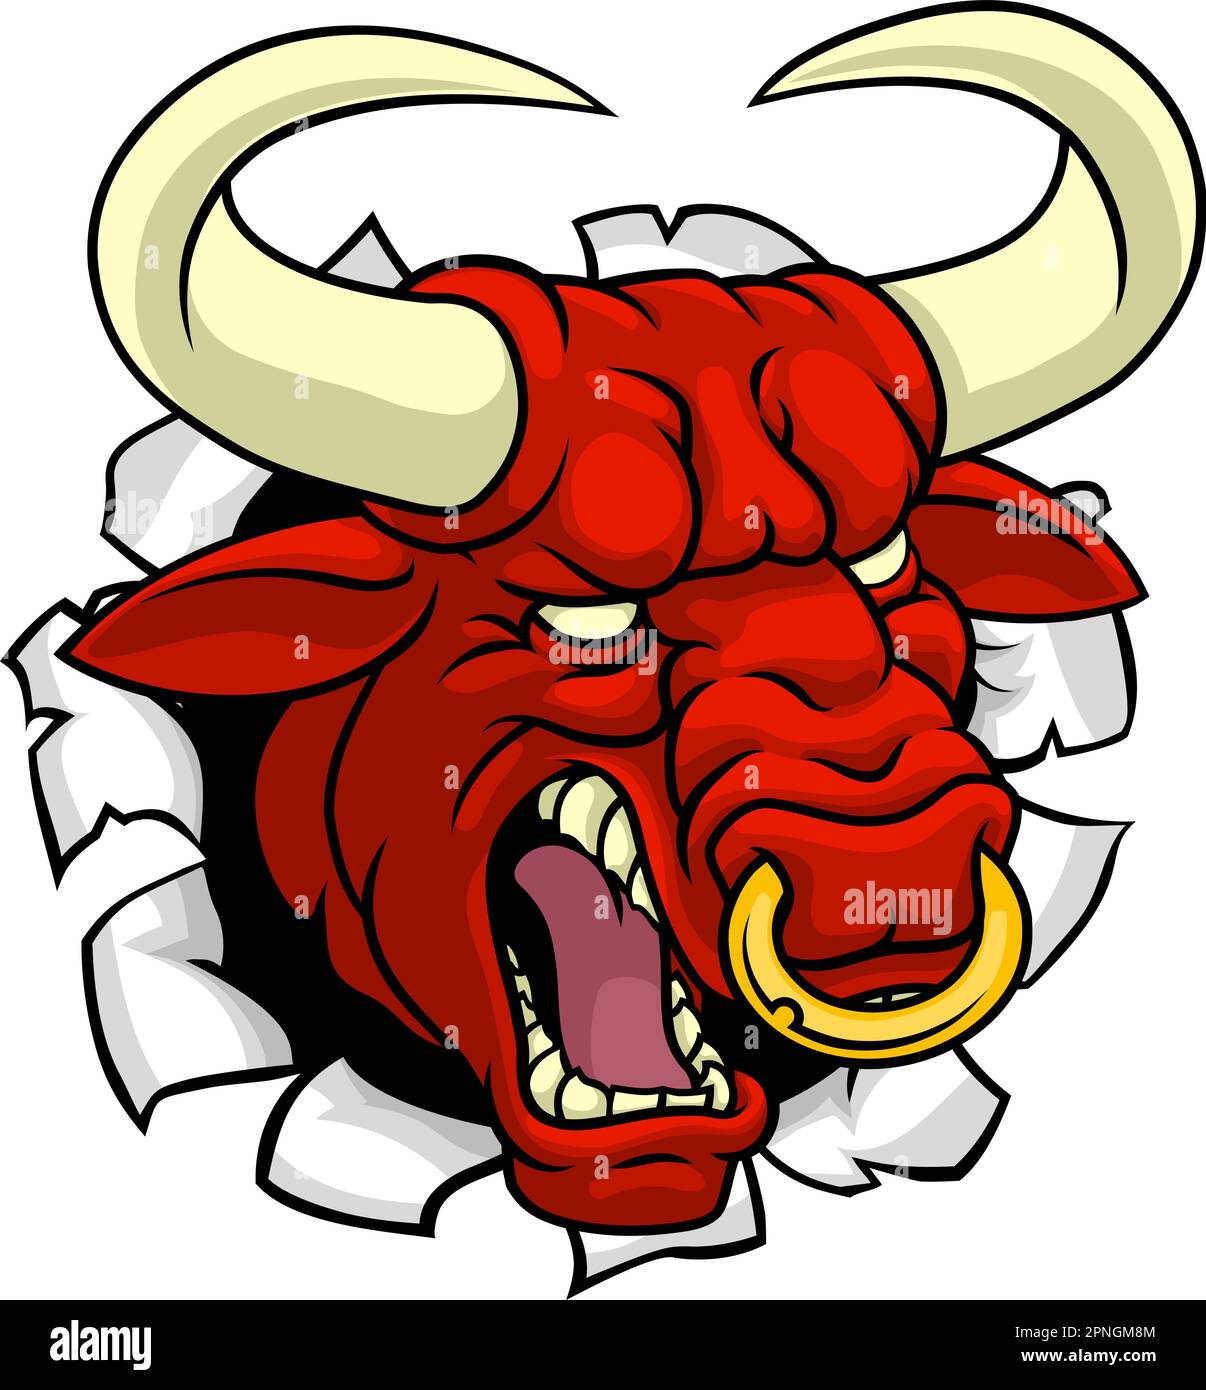 Bull Minotaur Longhorn Monster Cow Mascot Cartoon Stock Vector